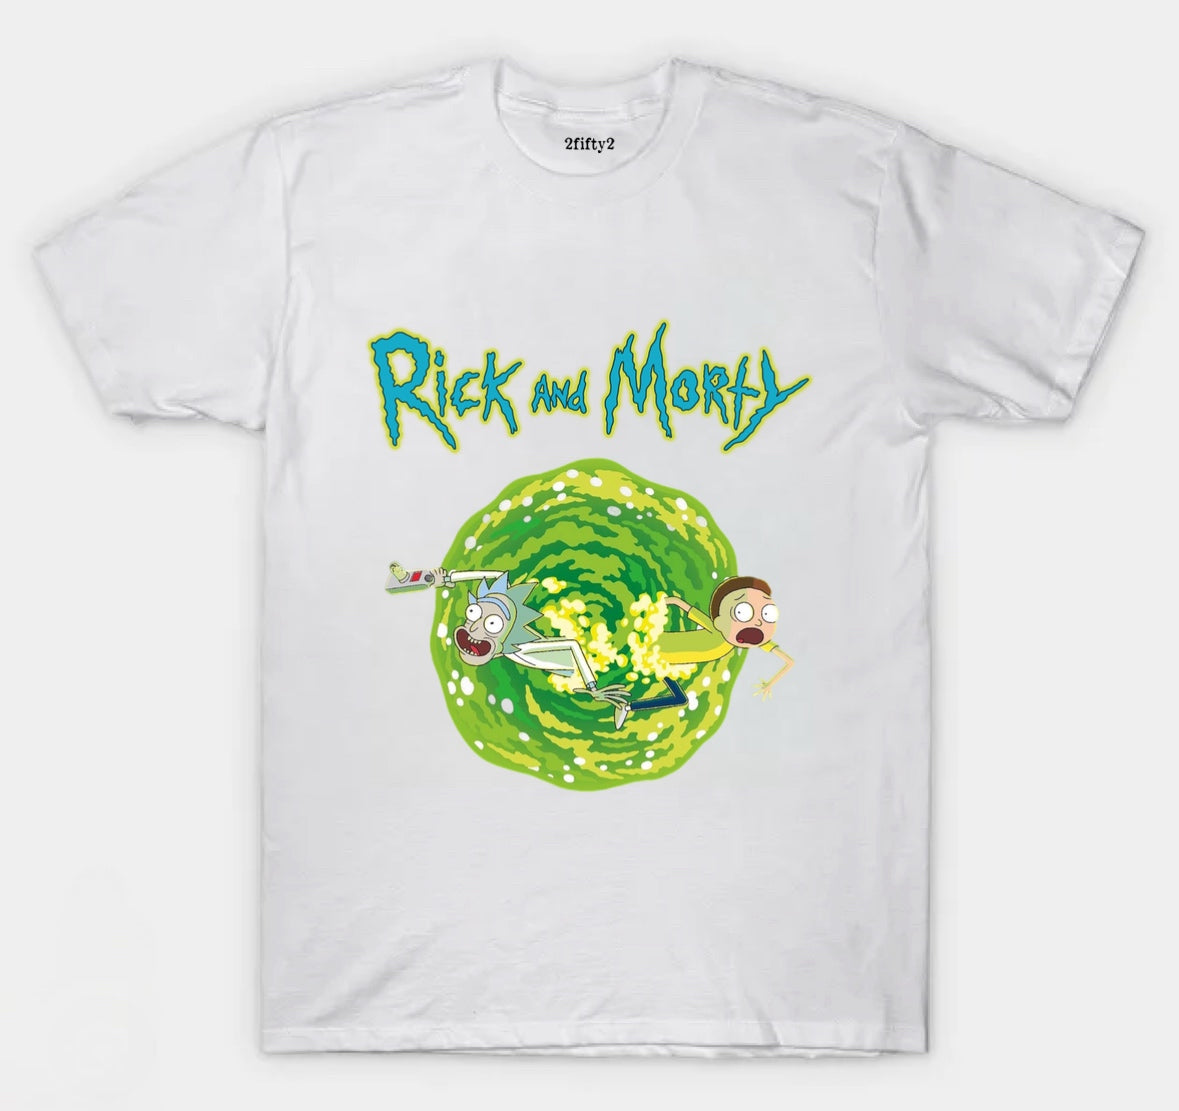 Graphic Rick and Morty tee shirt